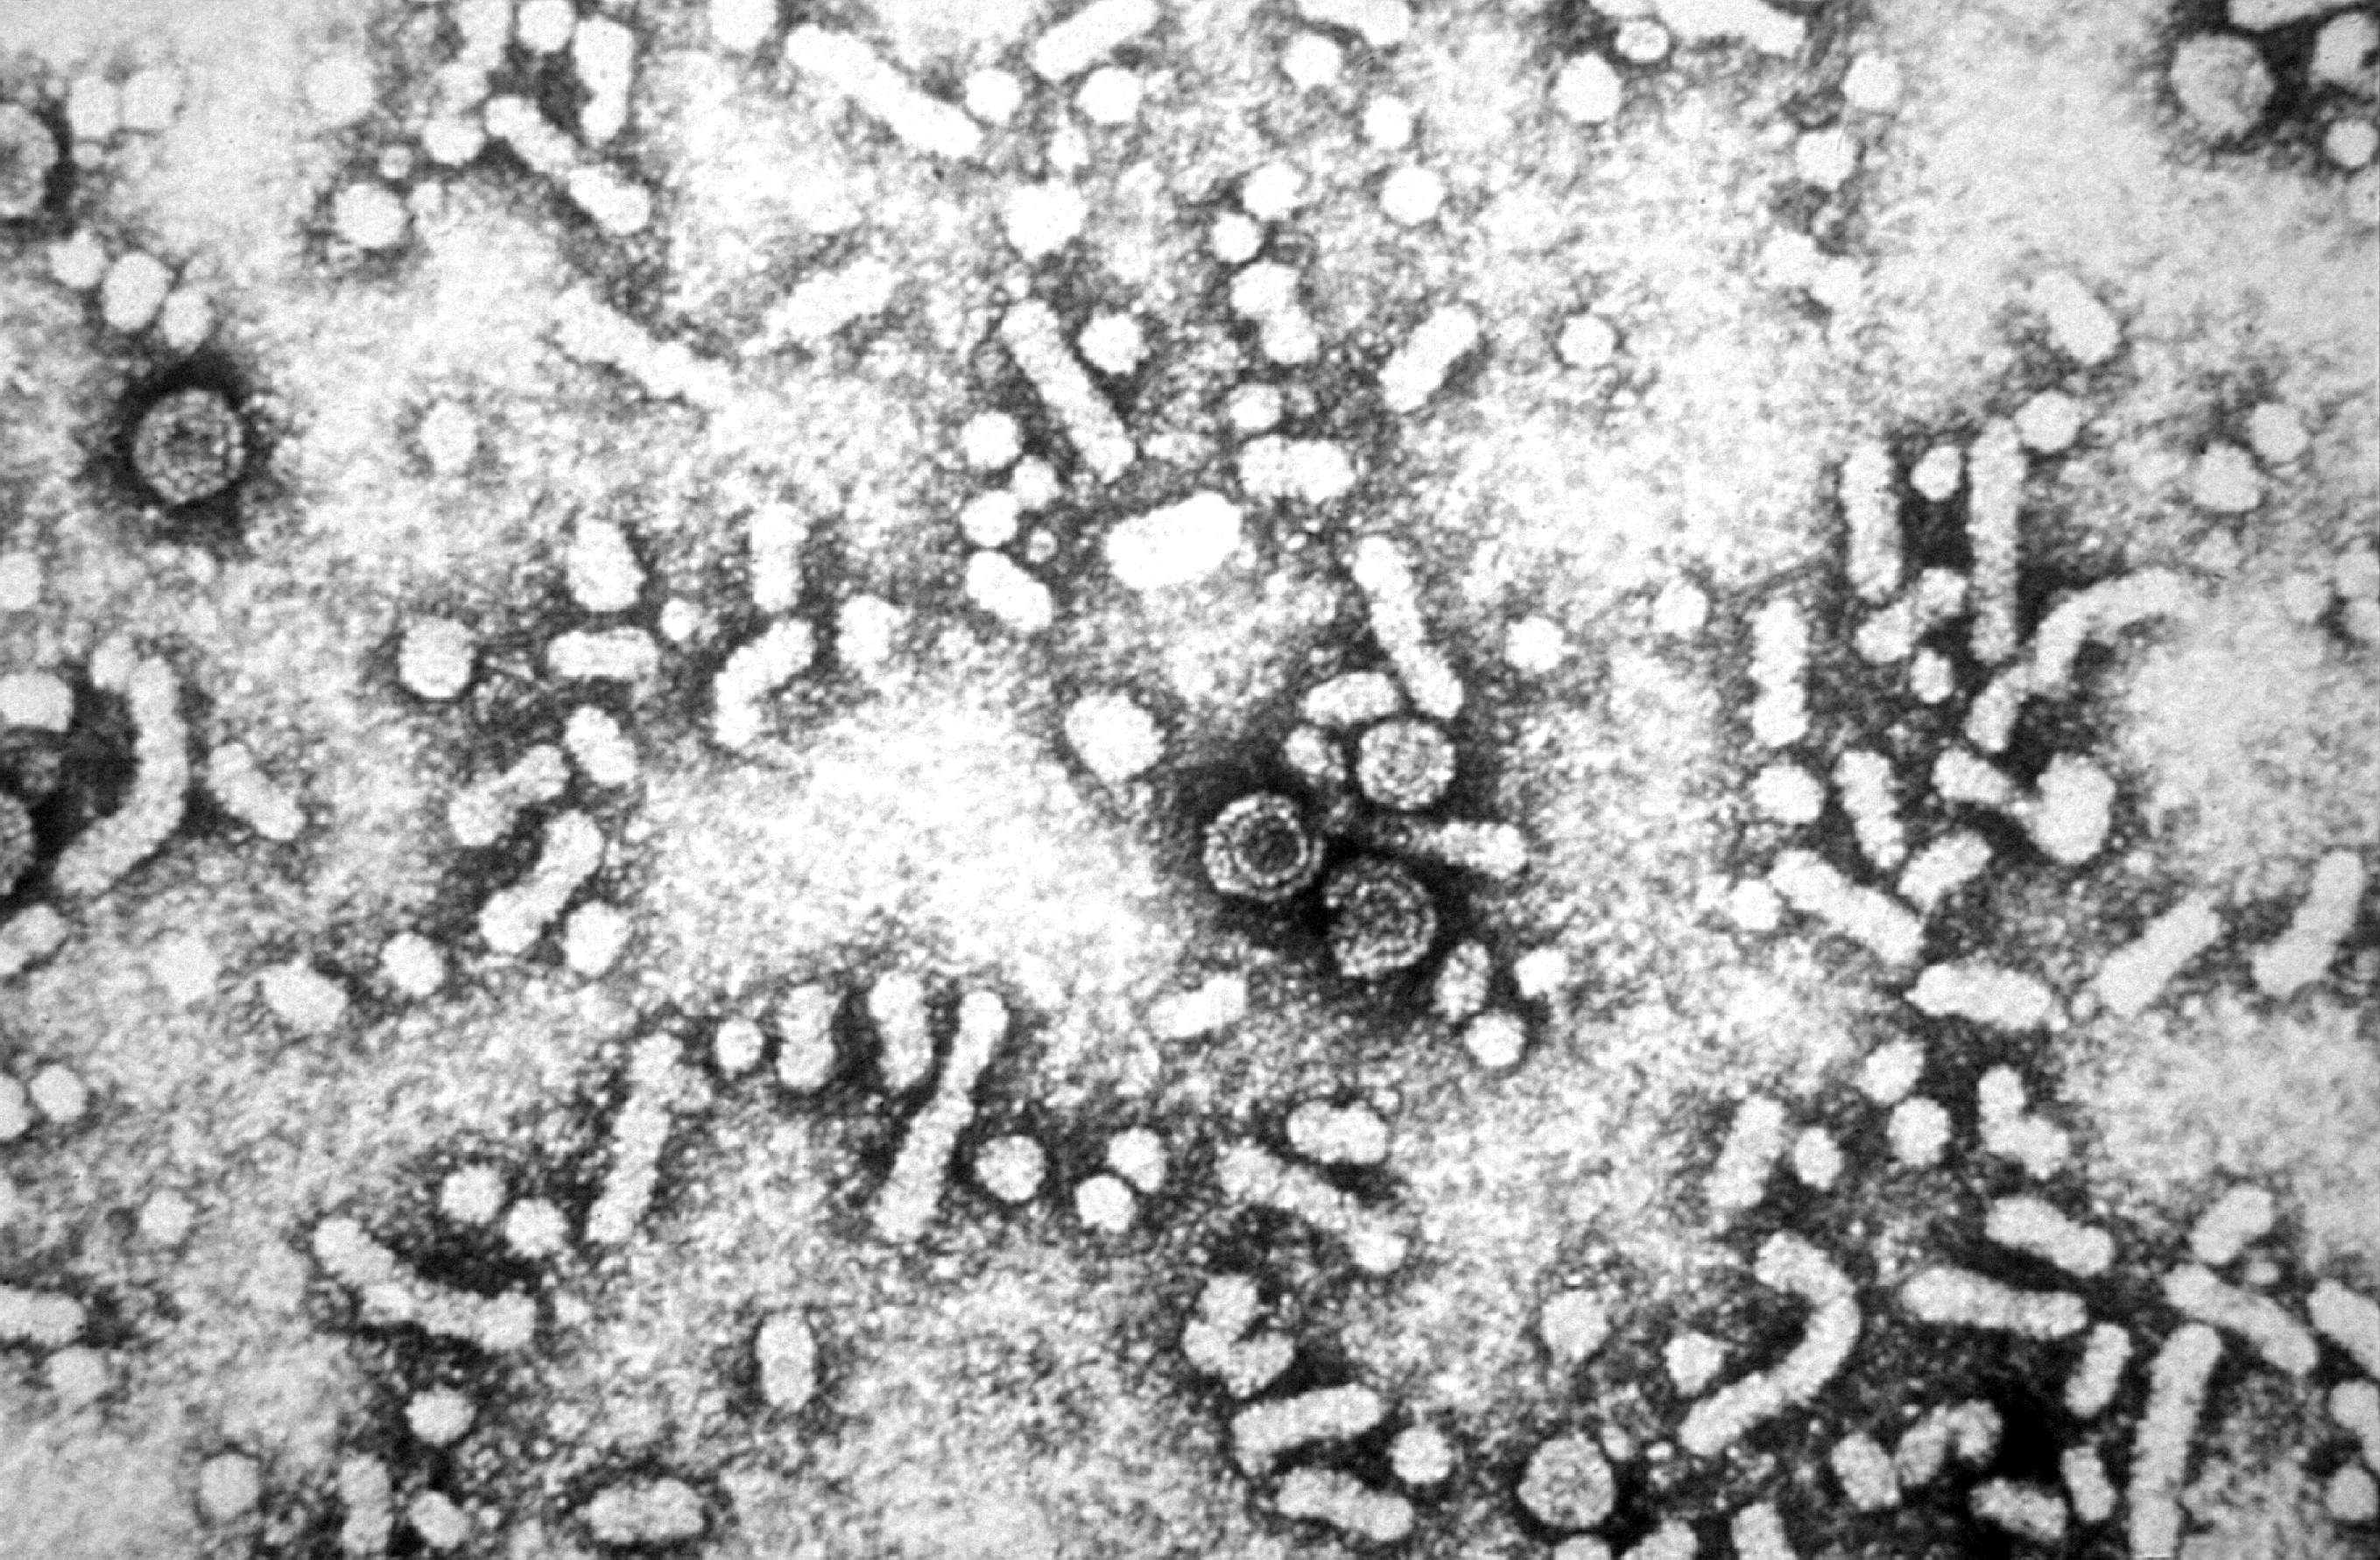 Free picture: electron micrograph, presence, hepatitis, virus, dane